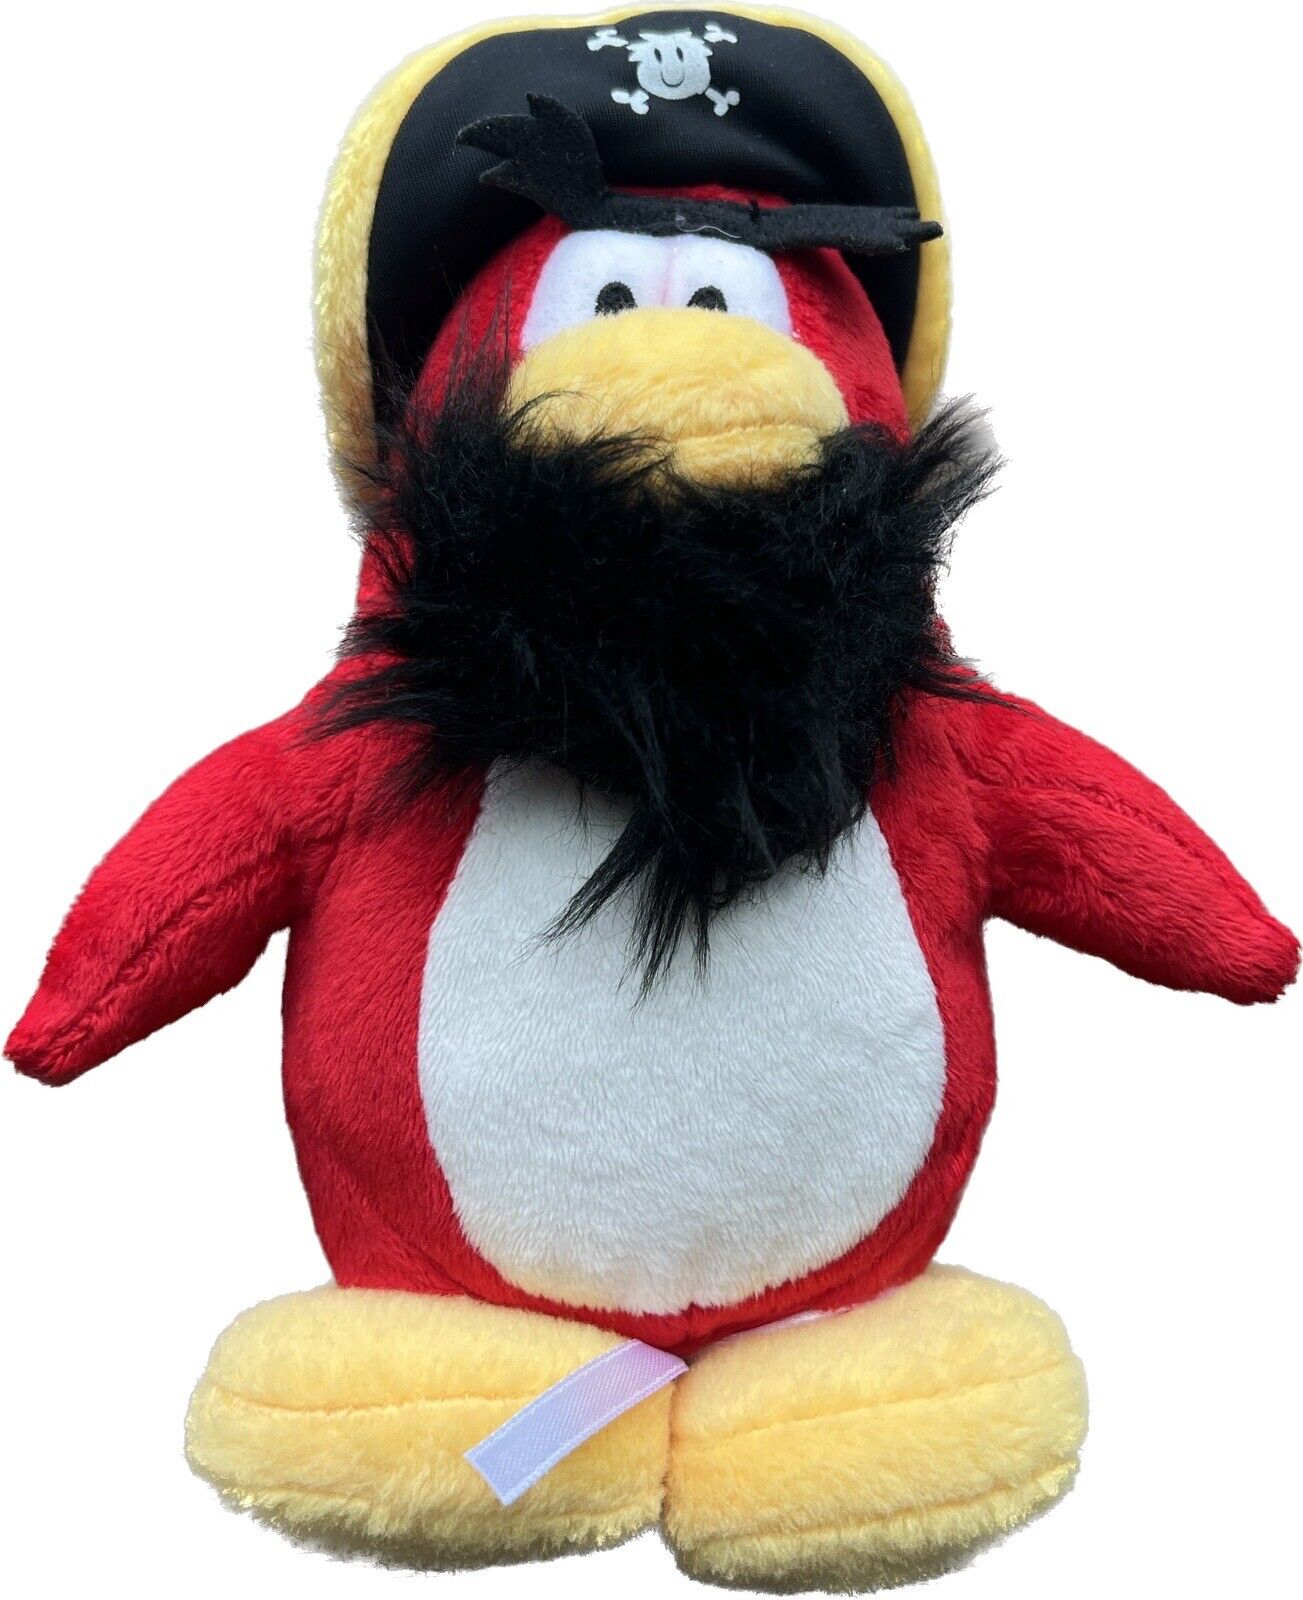 Disney Club Penguin Rock Hopper Plush Collectible Game Stuffed Toy 7”